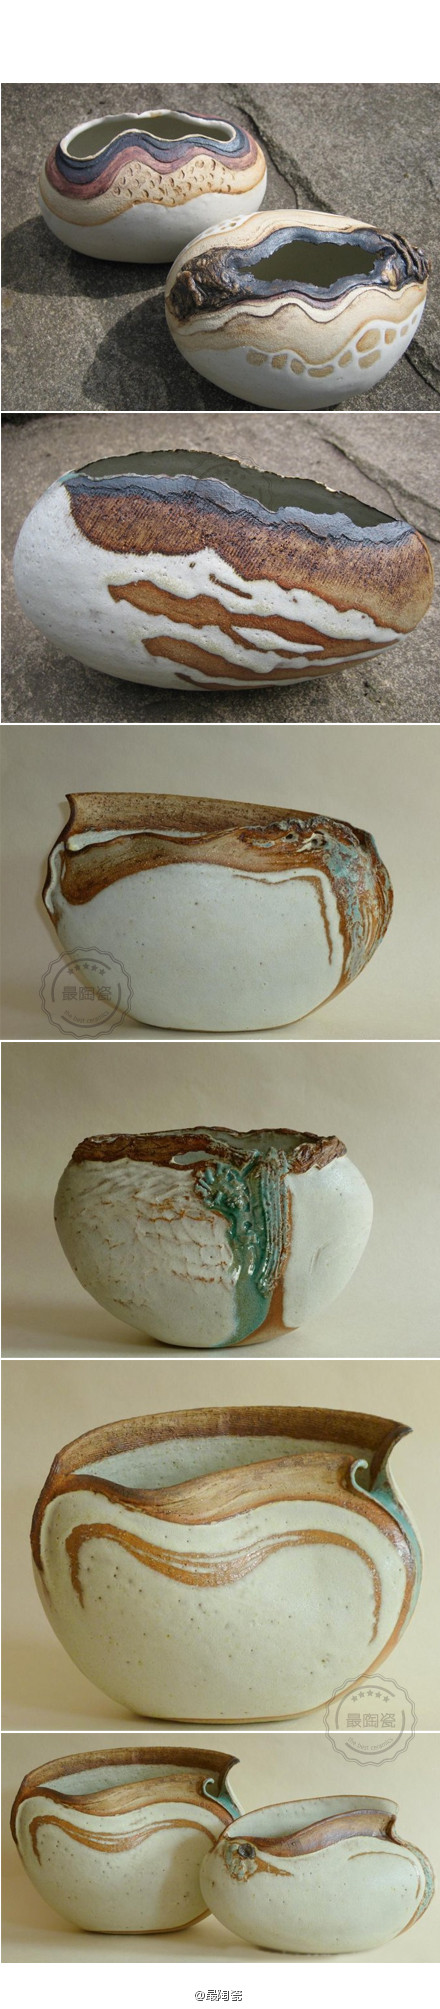 陶艺艺术家corthorn的创意陶瓷作品